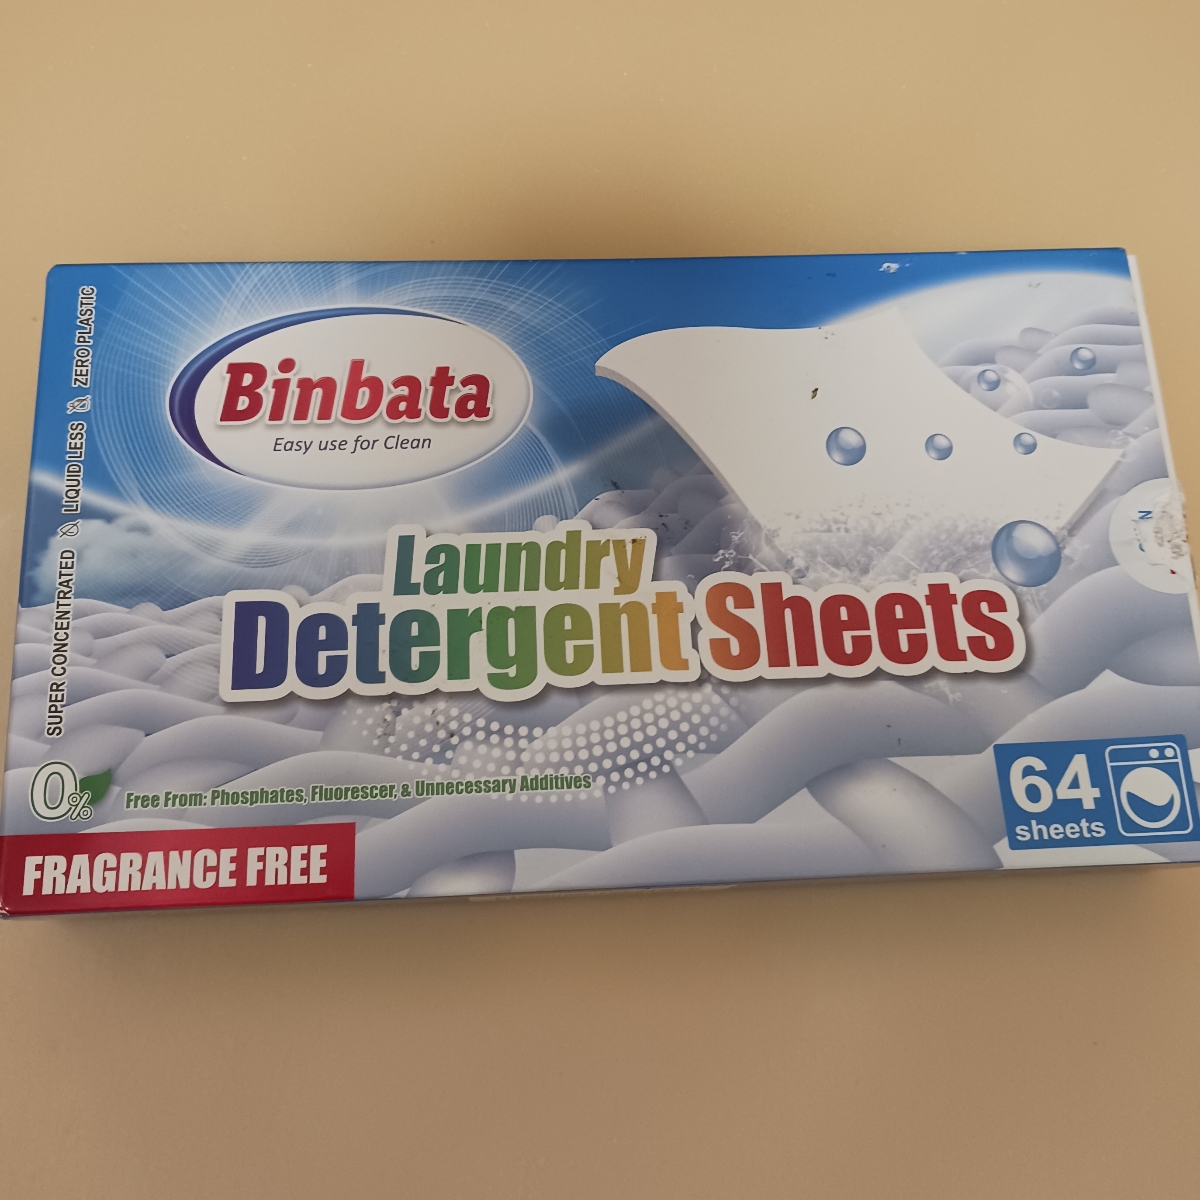 Binbata Laundry Detergent Sheets Reviews